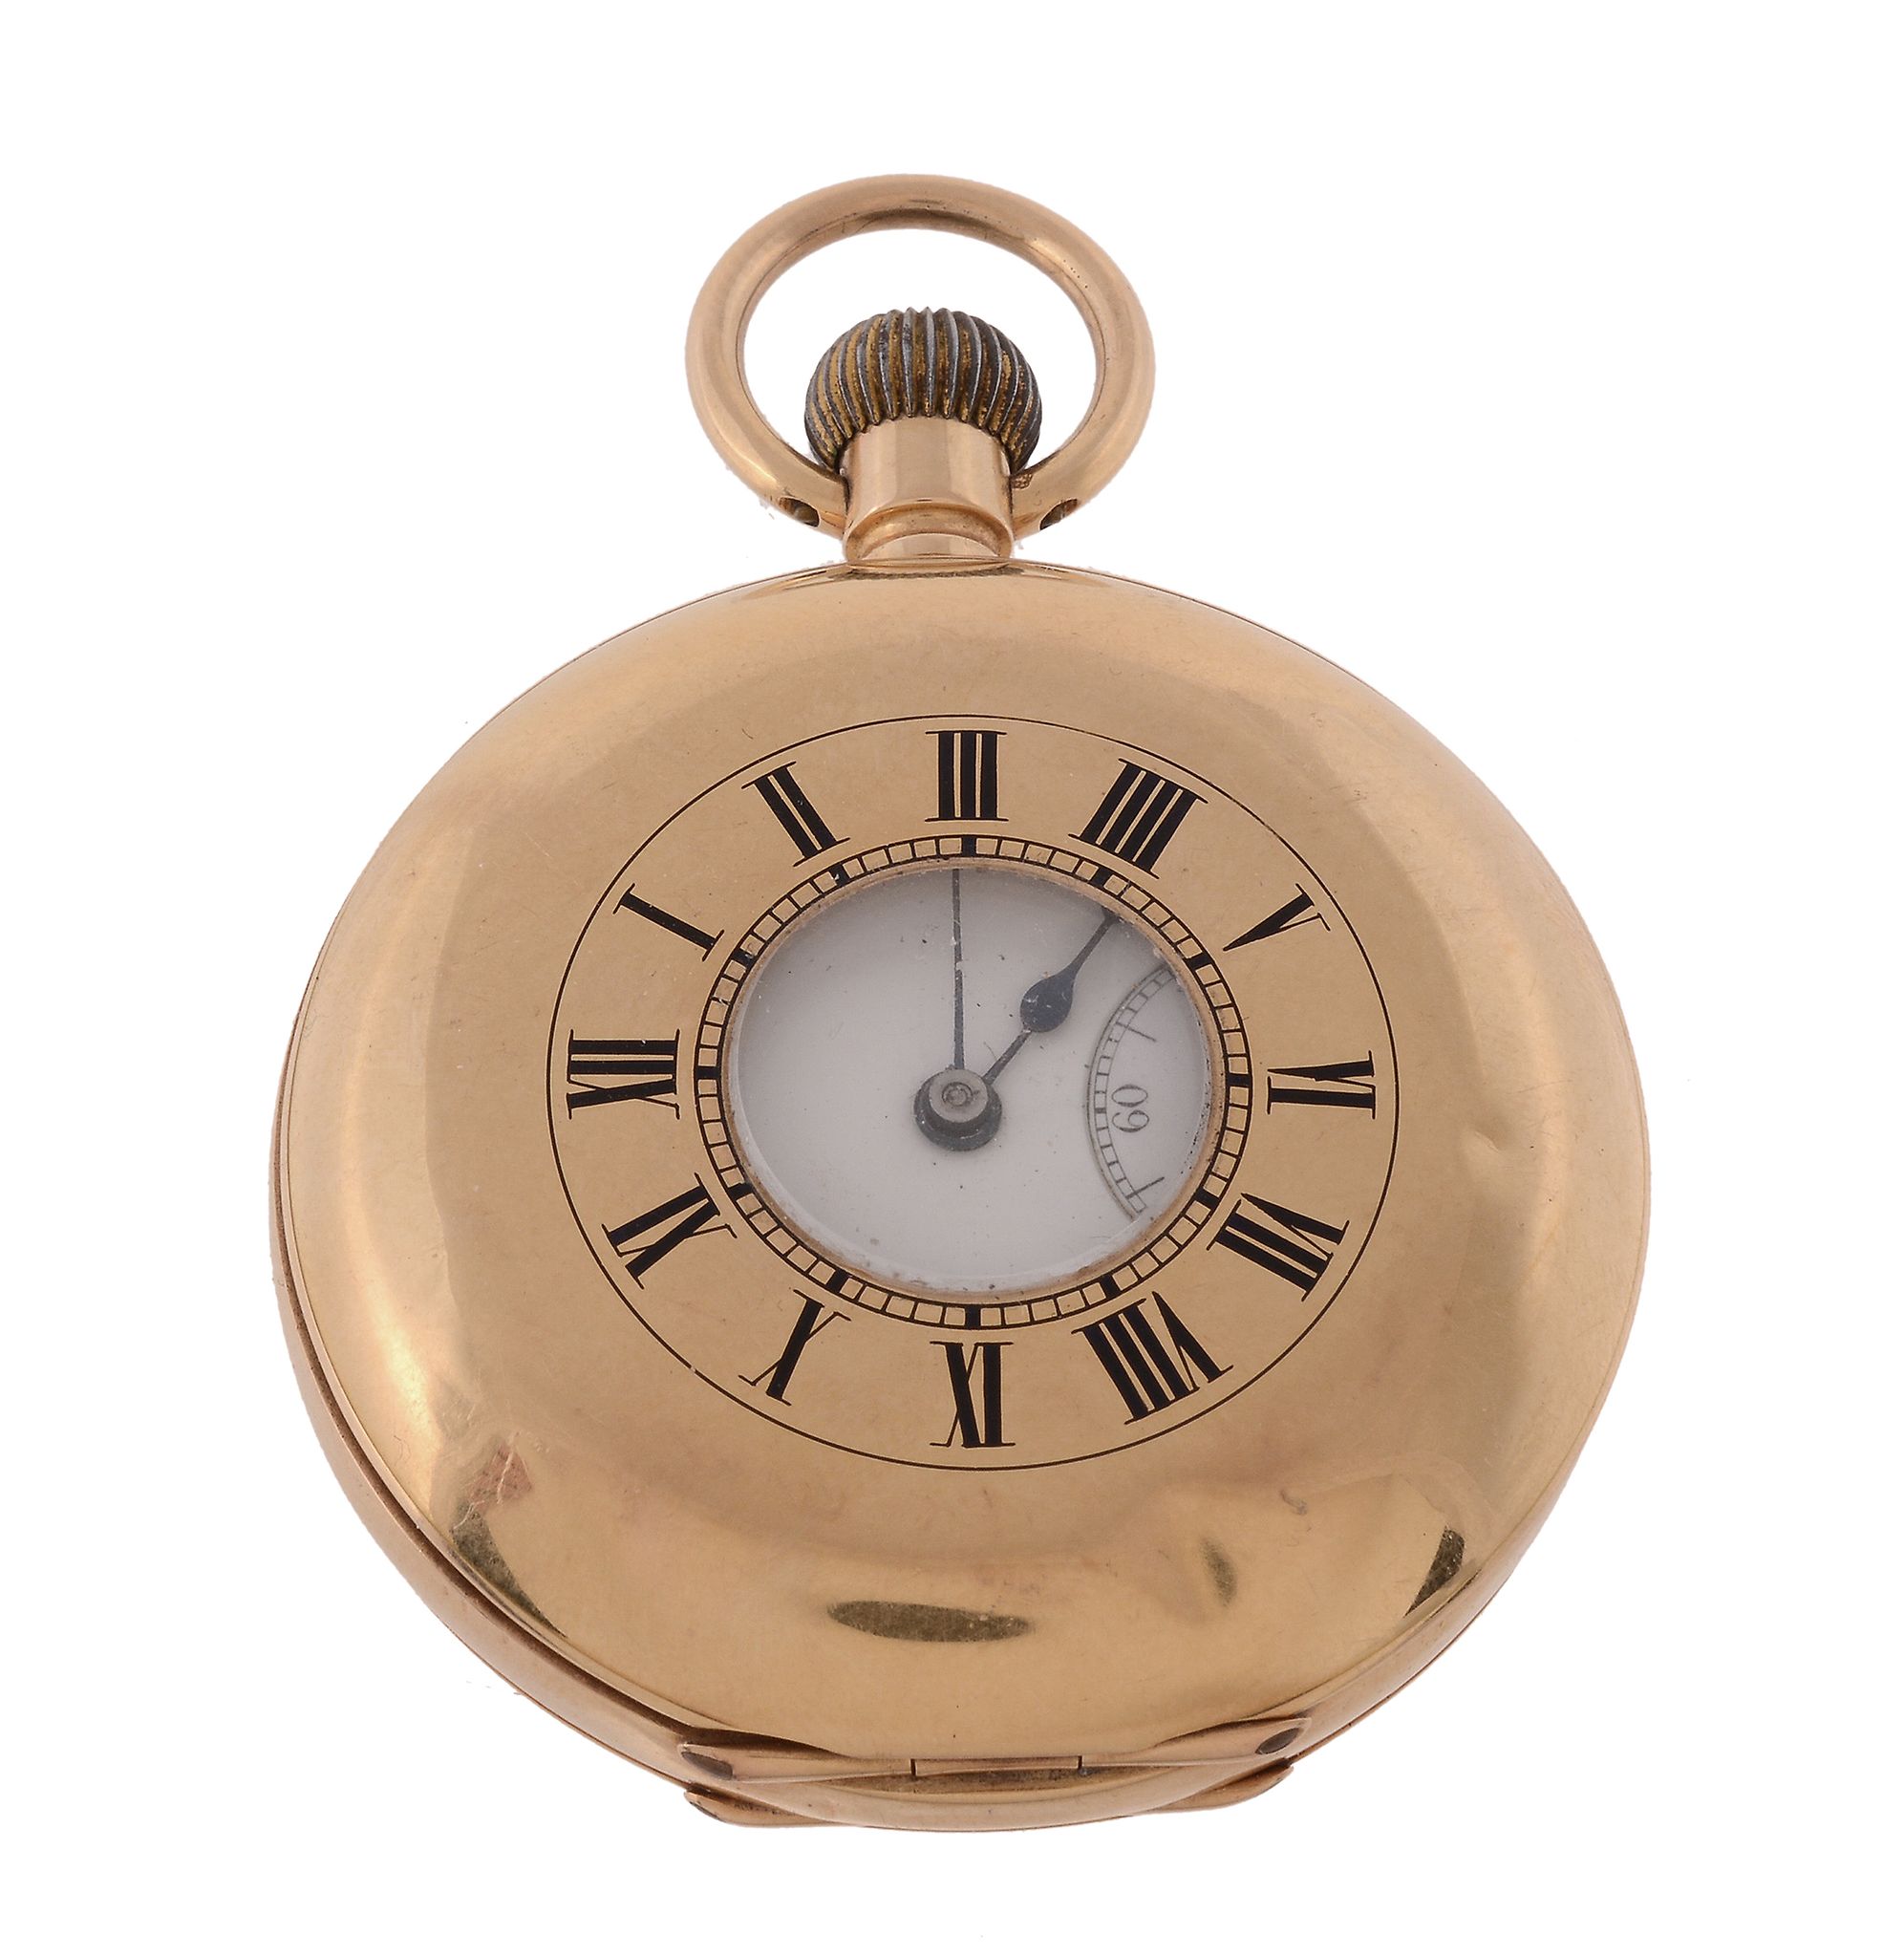 G. Spiegelhlter Co., an 18 carat gold keyless wind half hunter pocket watch, no.600489, three